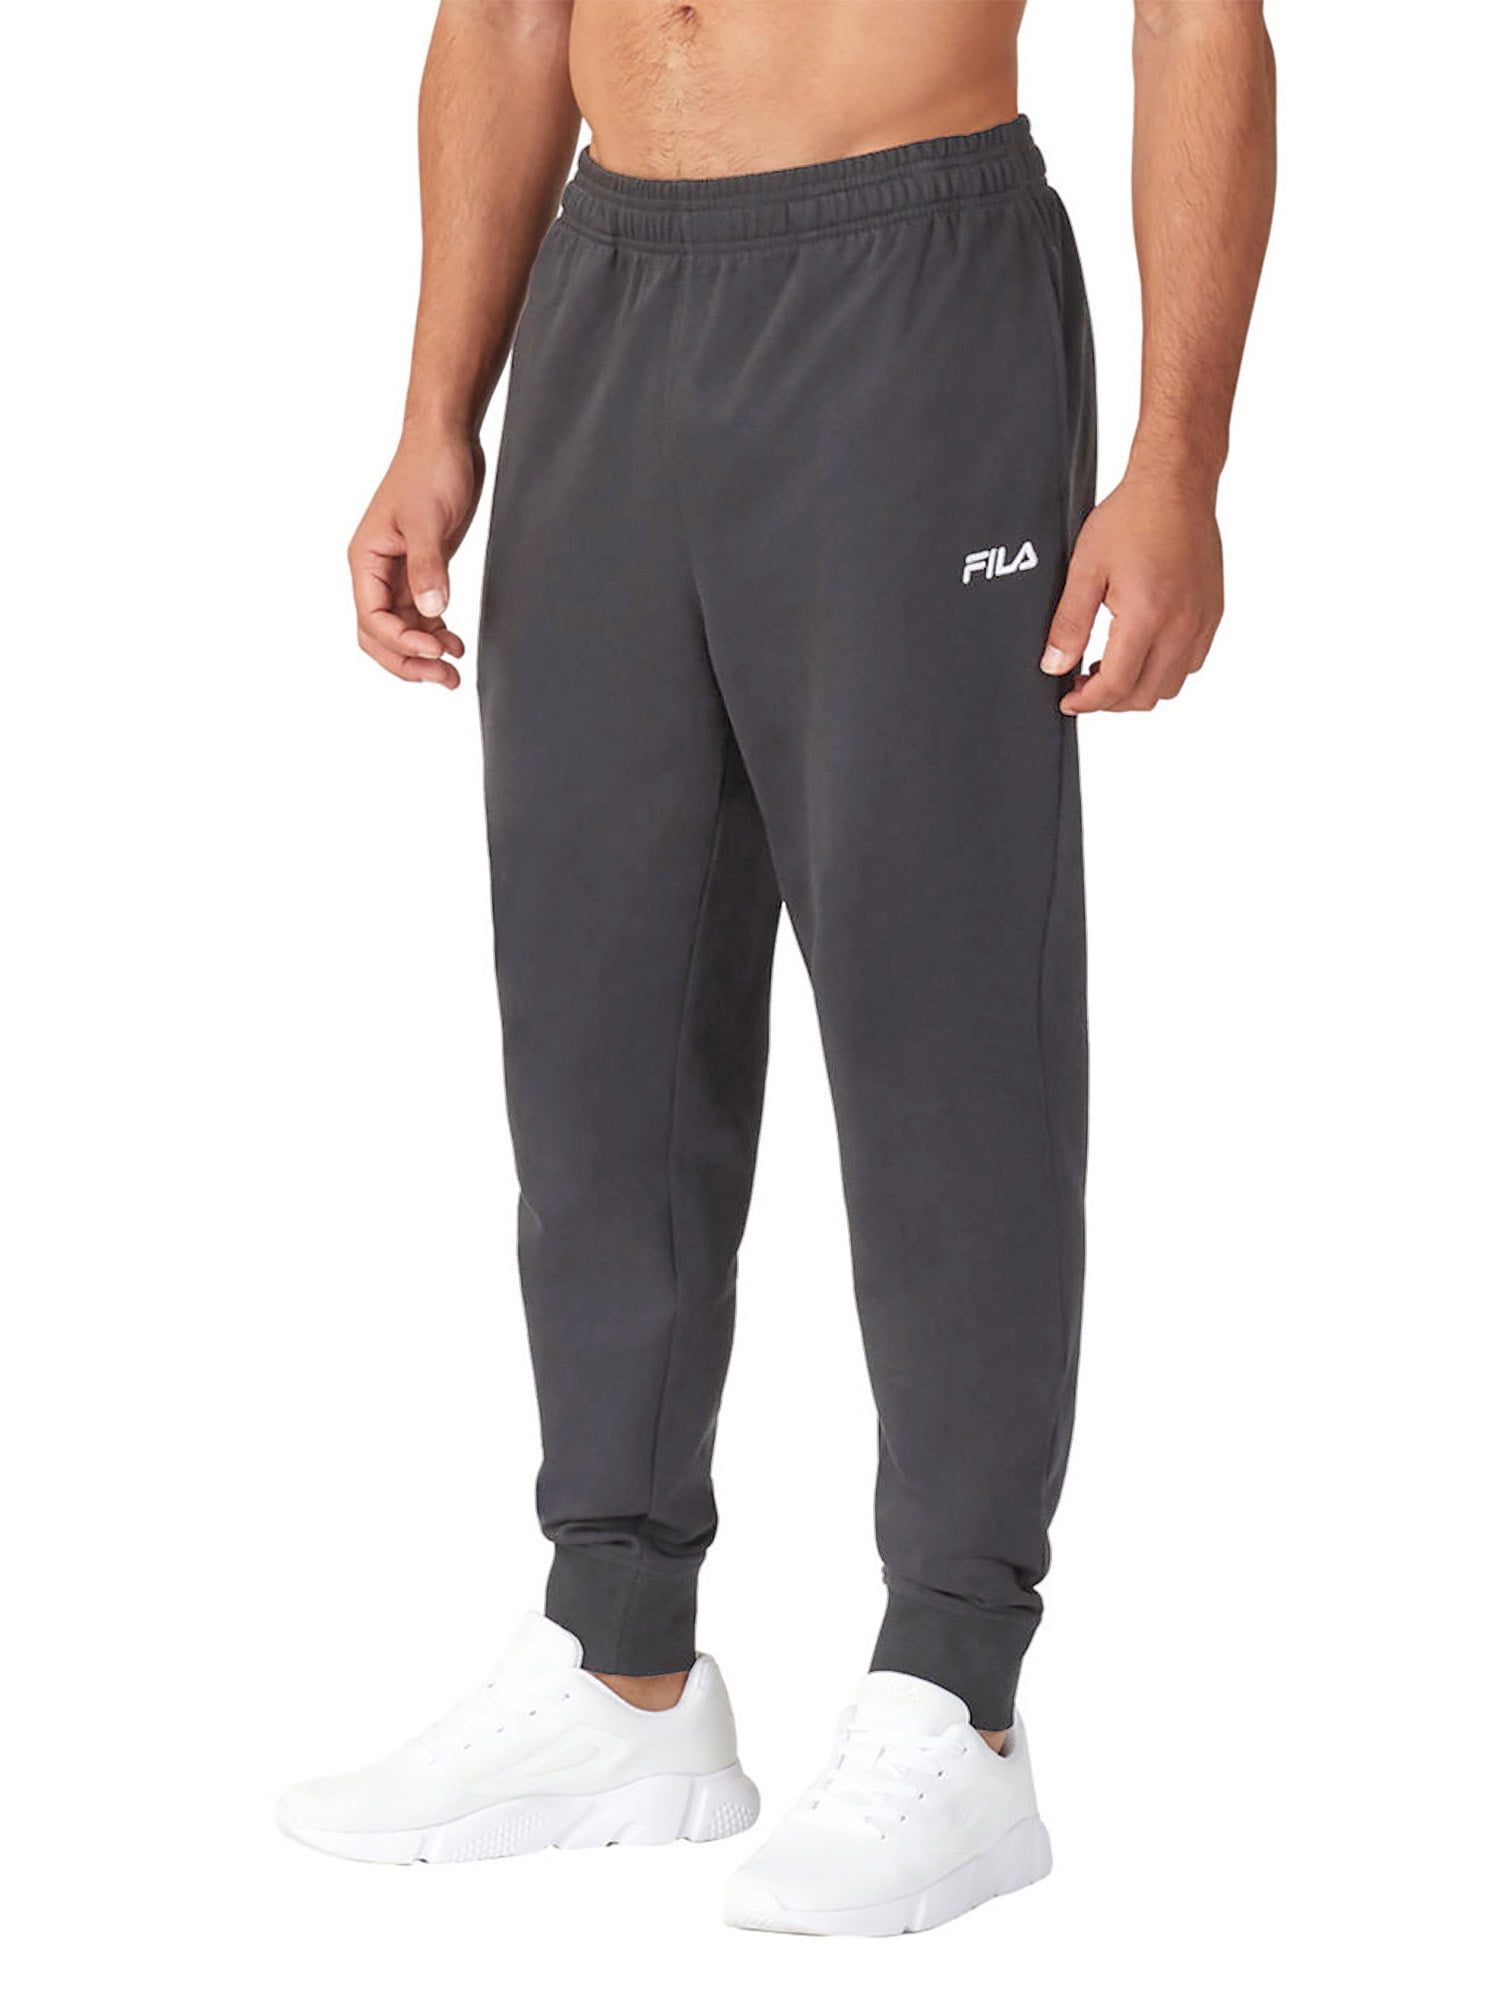 Fila Big & Tall Men's Classic fleece jogger pant with left hip Fila graphic  logo design , Sizes XLT-6XL 